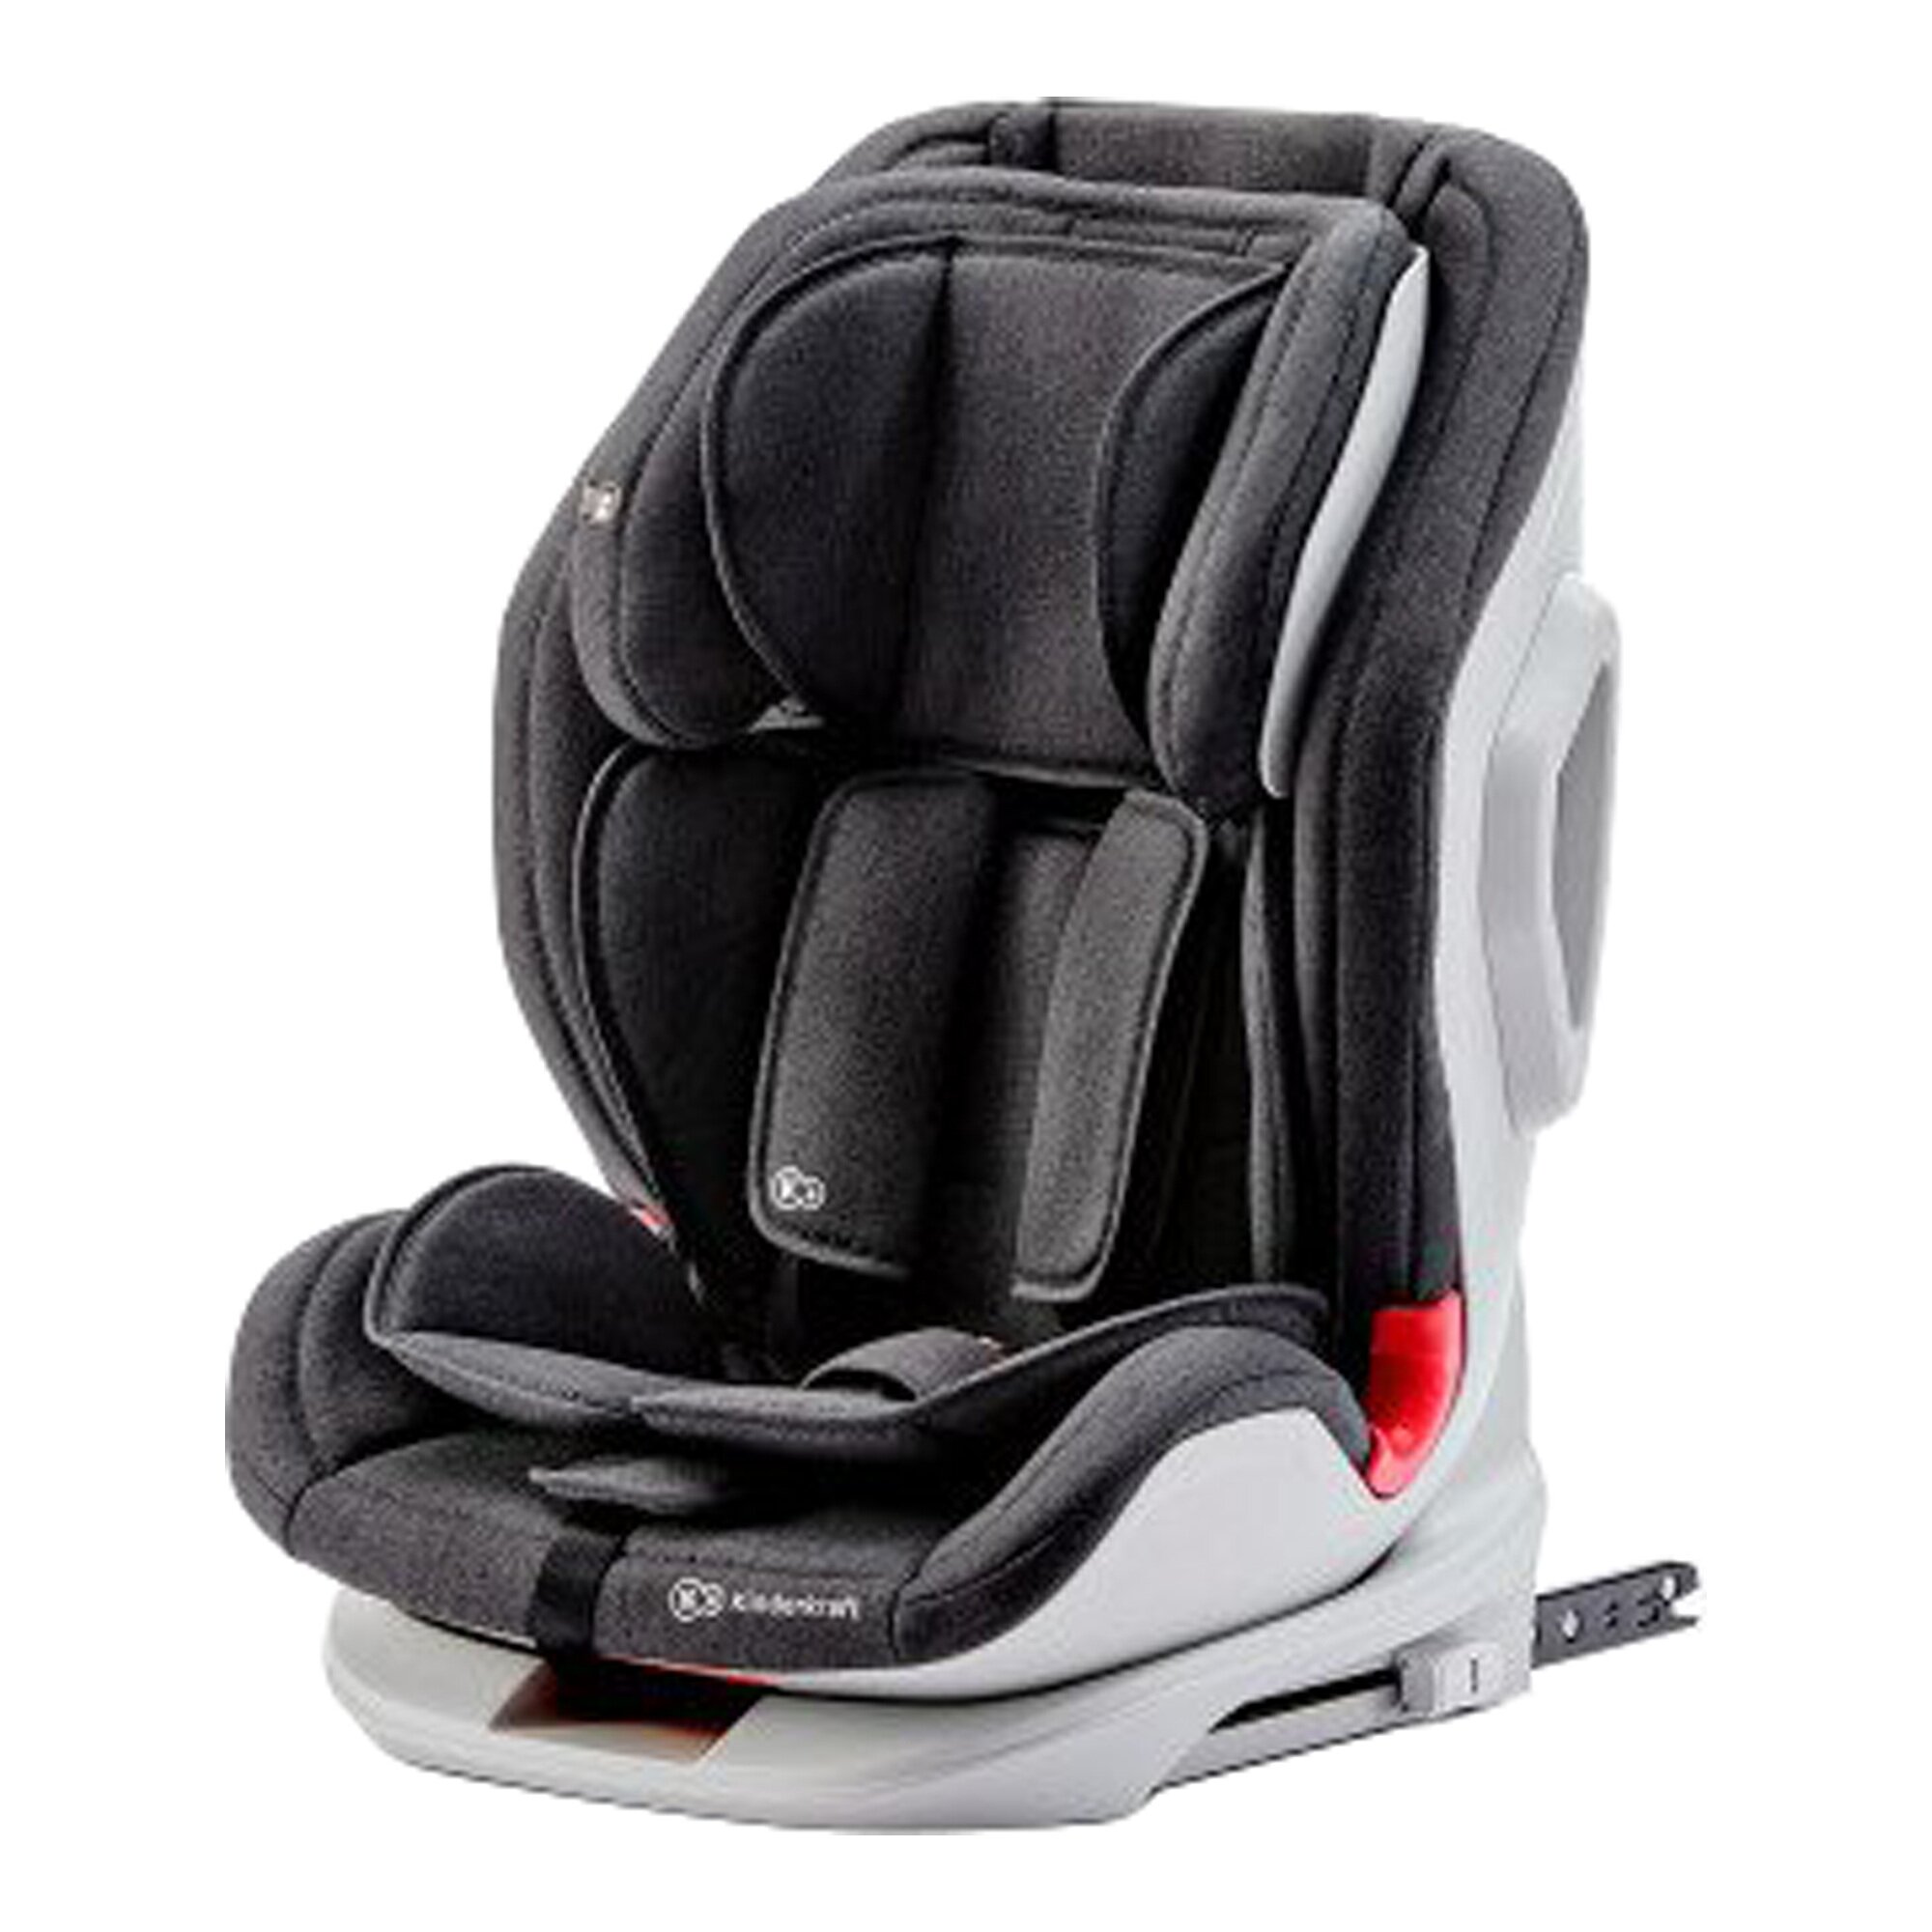 Kinderkraft Kinderautositz Oneto3 Autokindersitz Autositz Kindersitz mit Isofix 9-36kg Gruppe 1 2 3 ECE R44/04 geprüft 5-Punkt-Sicherheitsgurt Schwarz